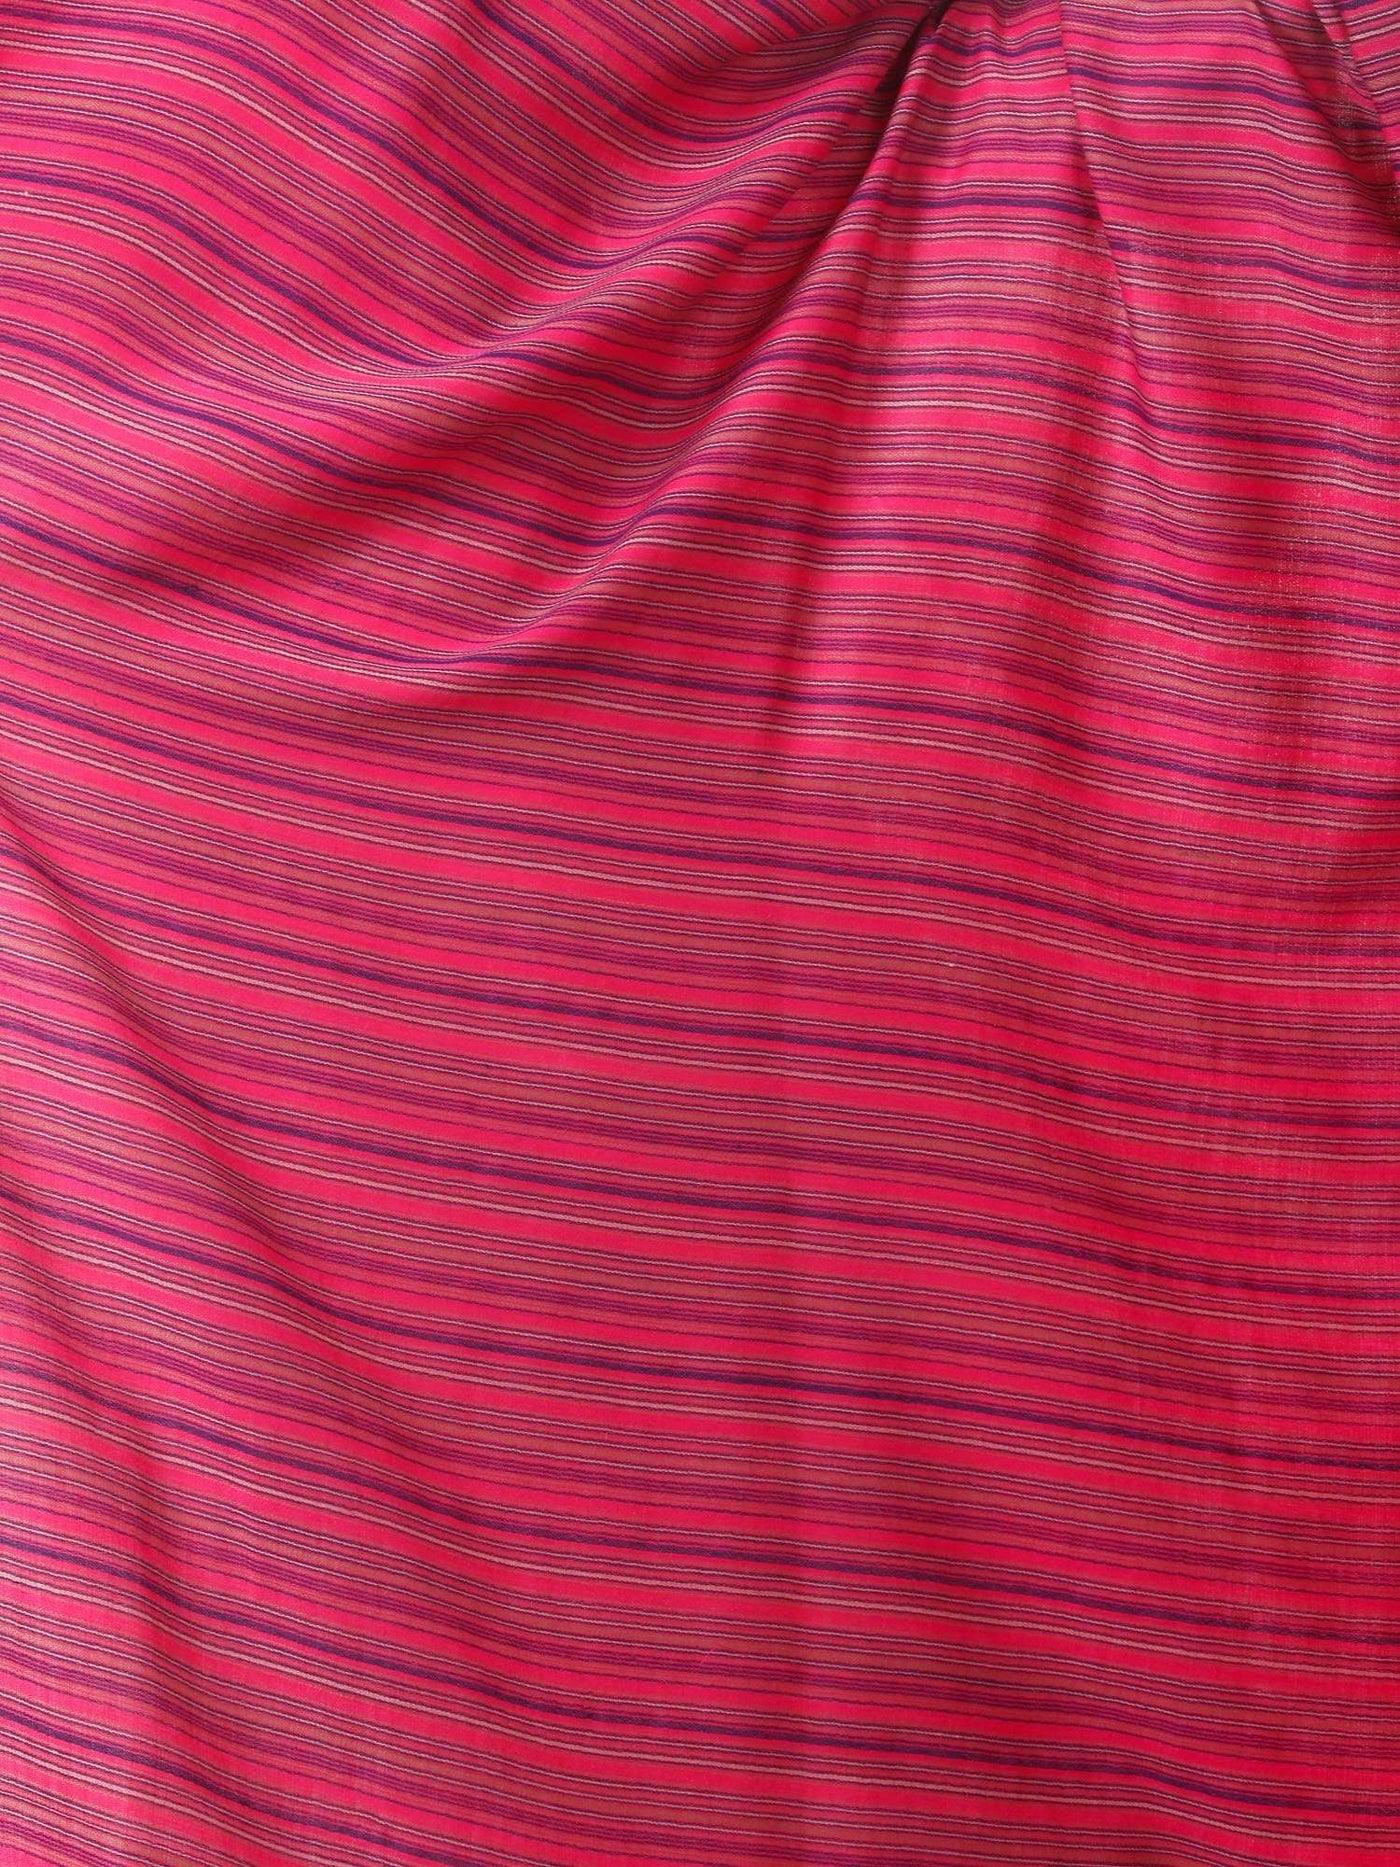 Pashtush Shawl Store Shawl Women's Fine Wool Striped Shawl, Australian Merino Wool - Fuchsia